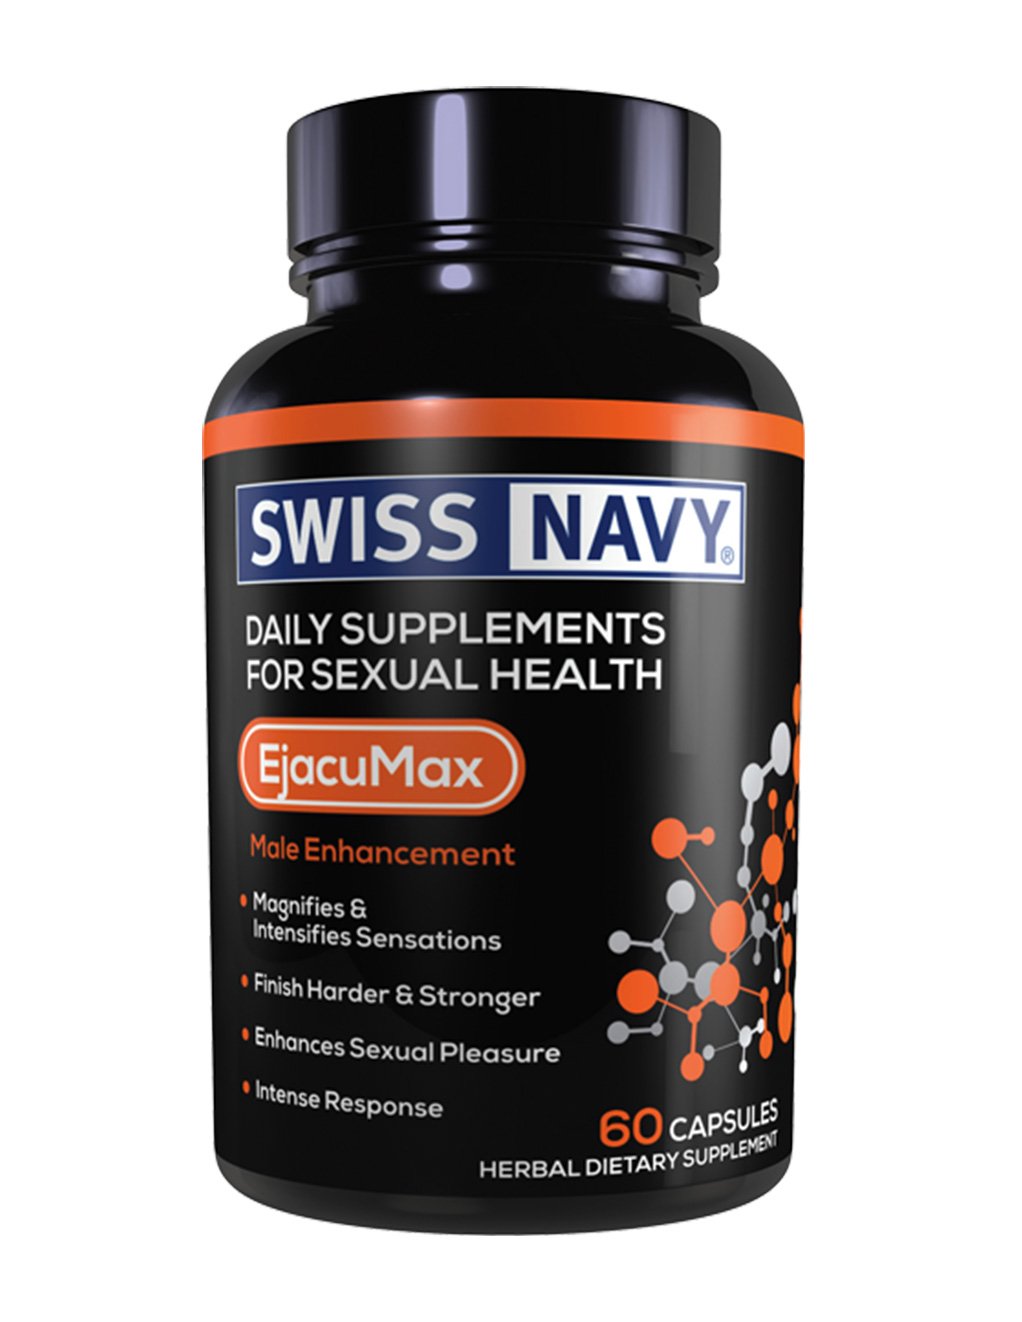 Swiss Navy Ejacumax For Him Supplement- 60ct